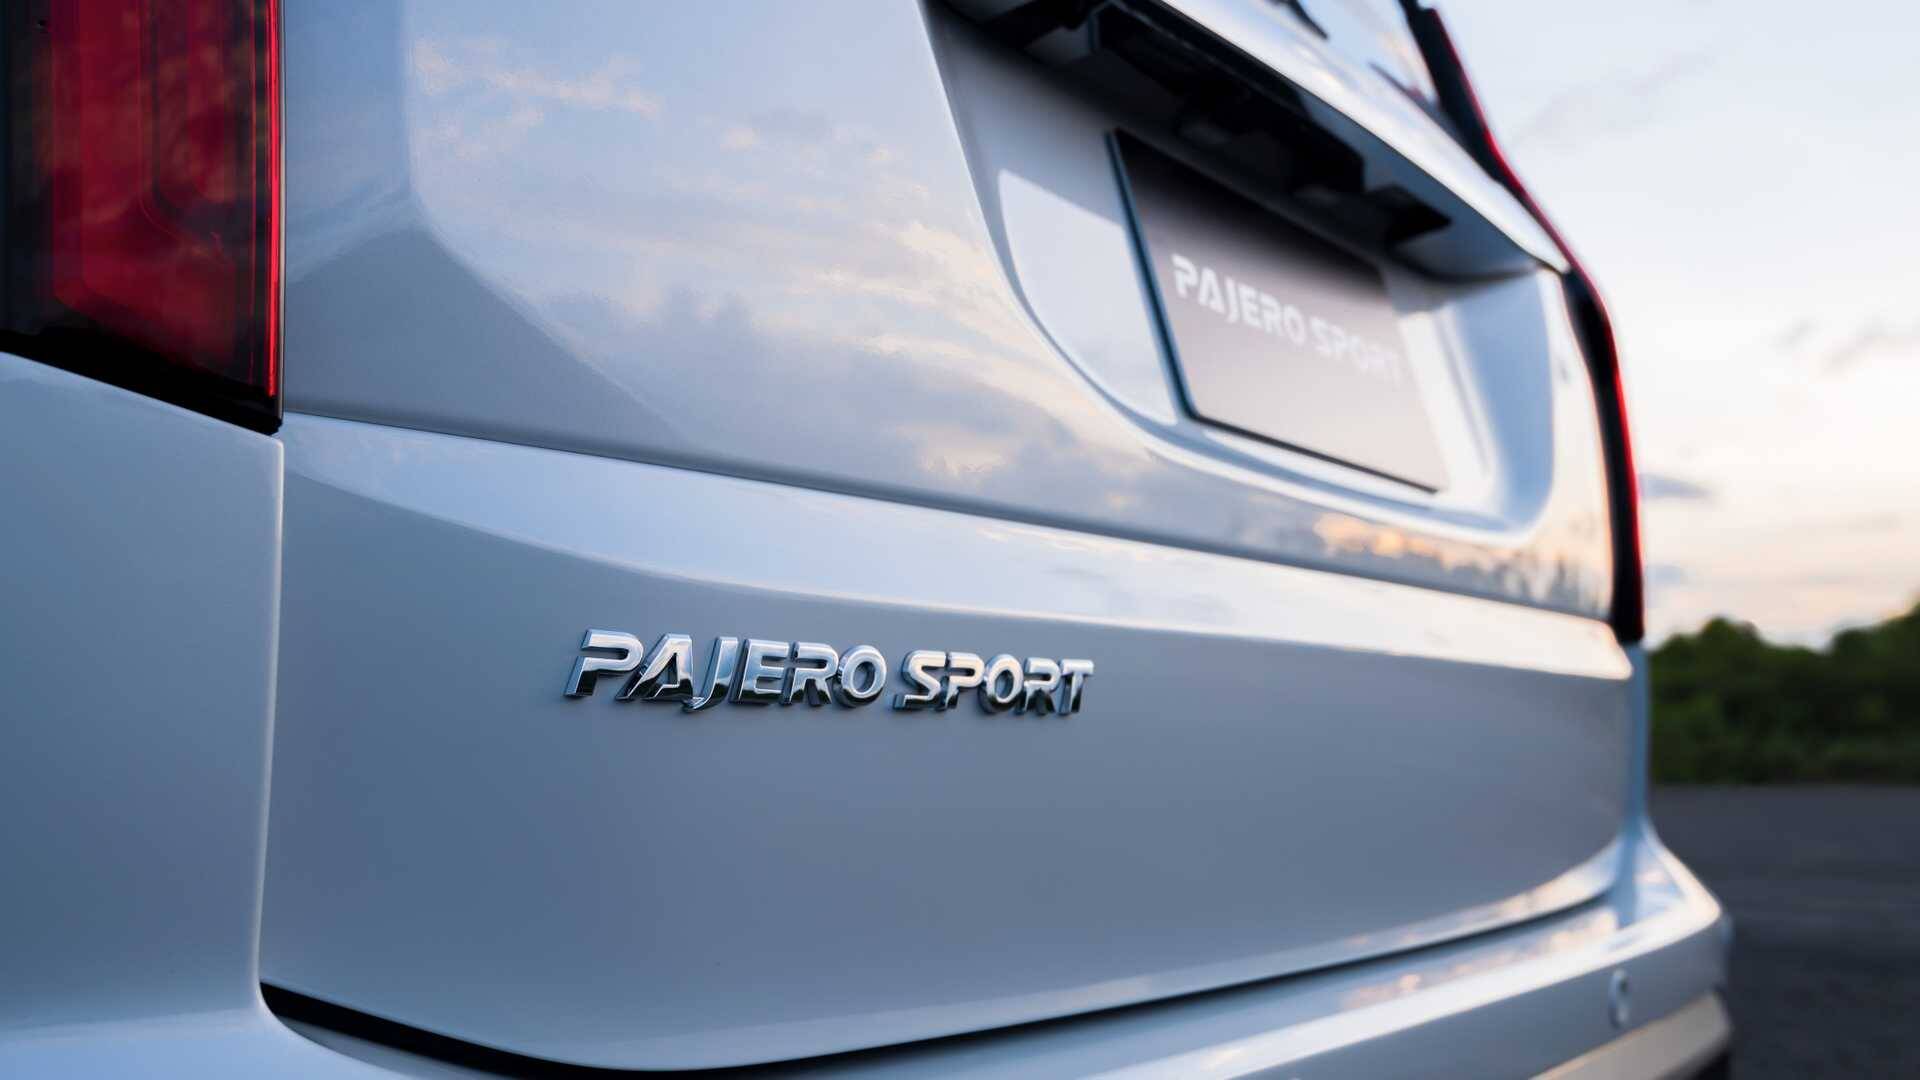 Mitsubishi Pajero Sport. Foto: Divulgação